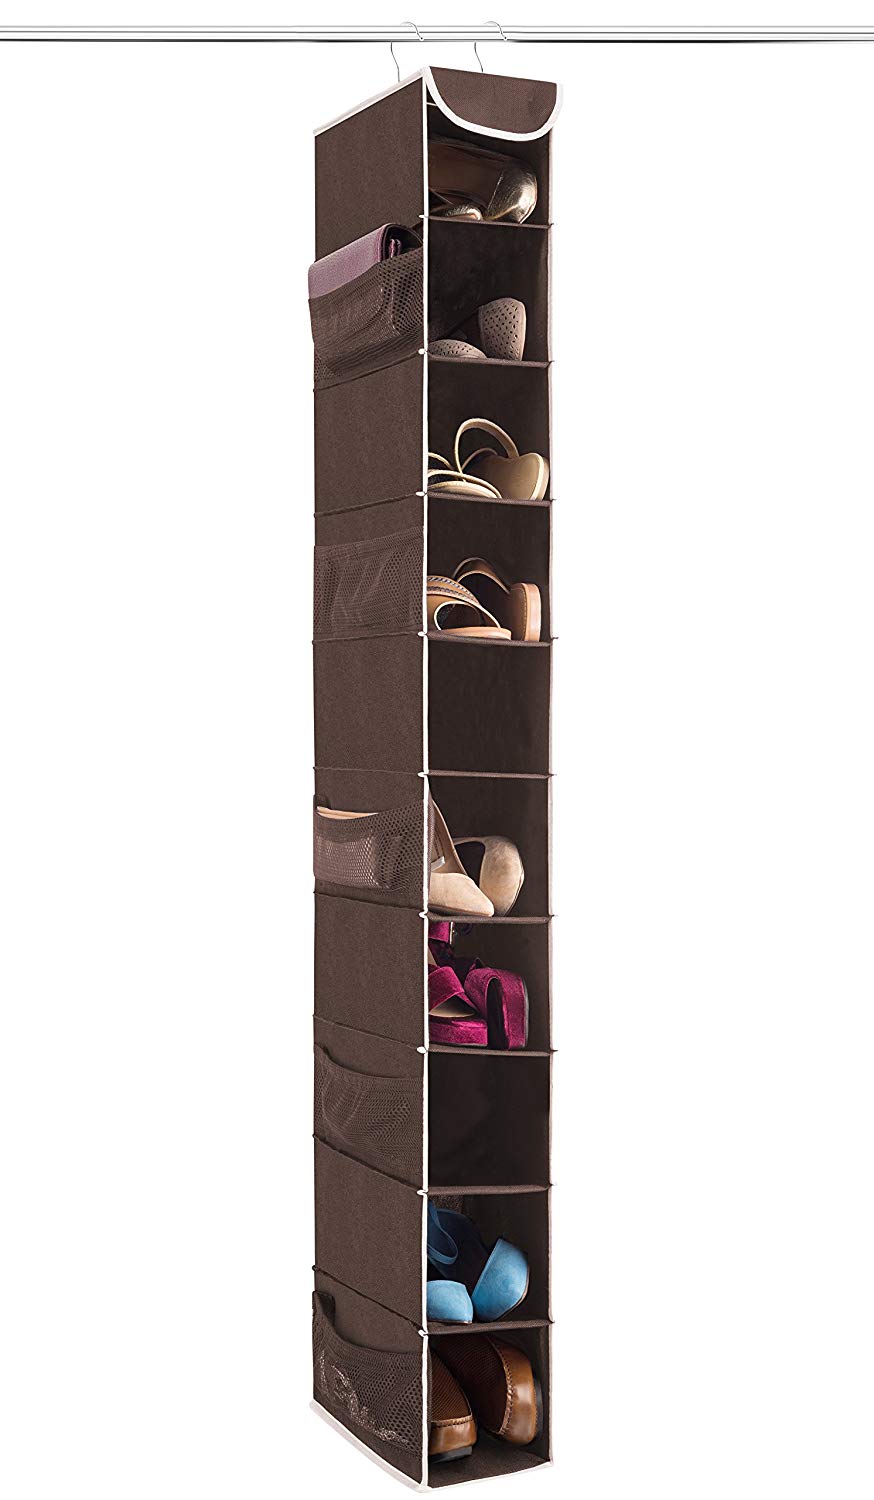 ZOBER 10-Shelf Hanging Shoe Organizer, Shoe Holder for Closet - 10 Mesh Pockets for Accessories - Breathable Polypropylene, Java - 5 ½” x 10 ½” x 54”